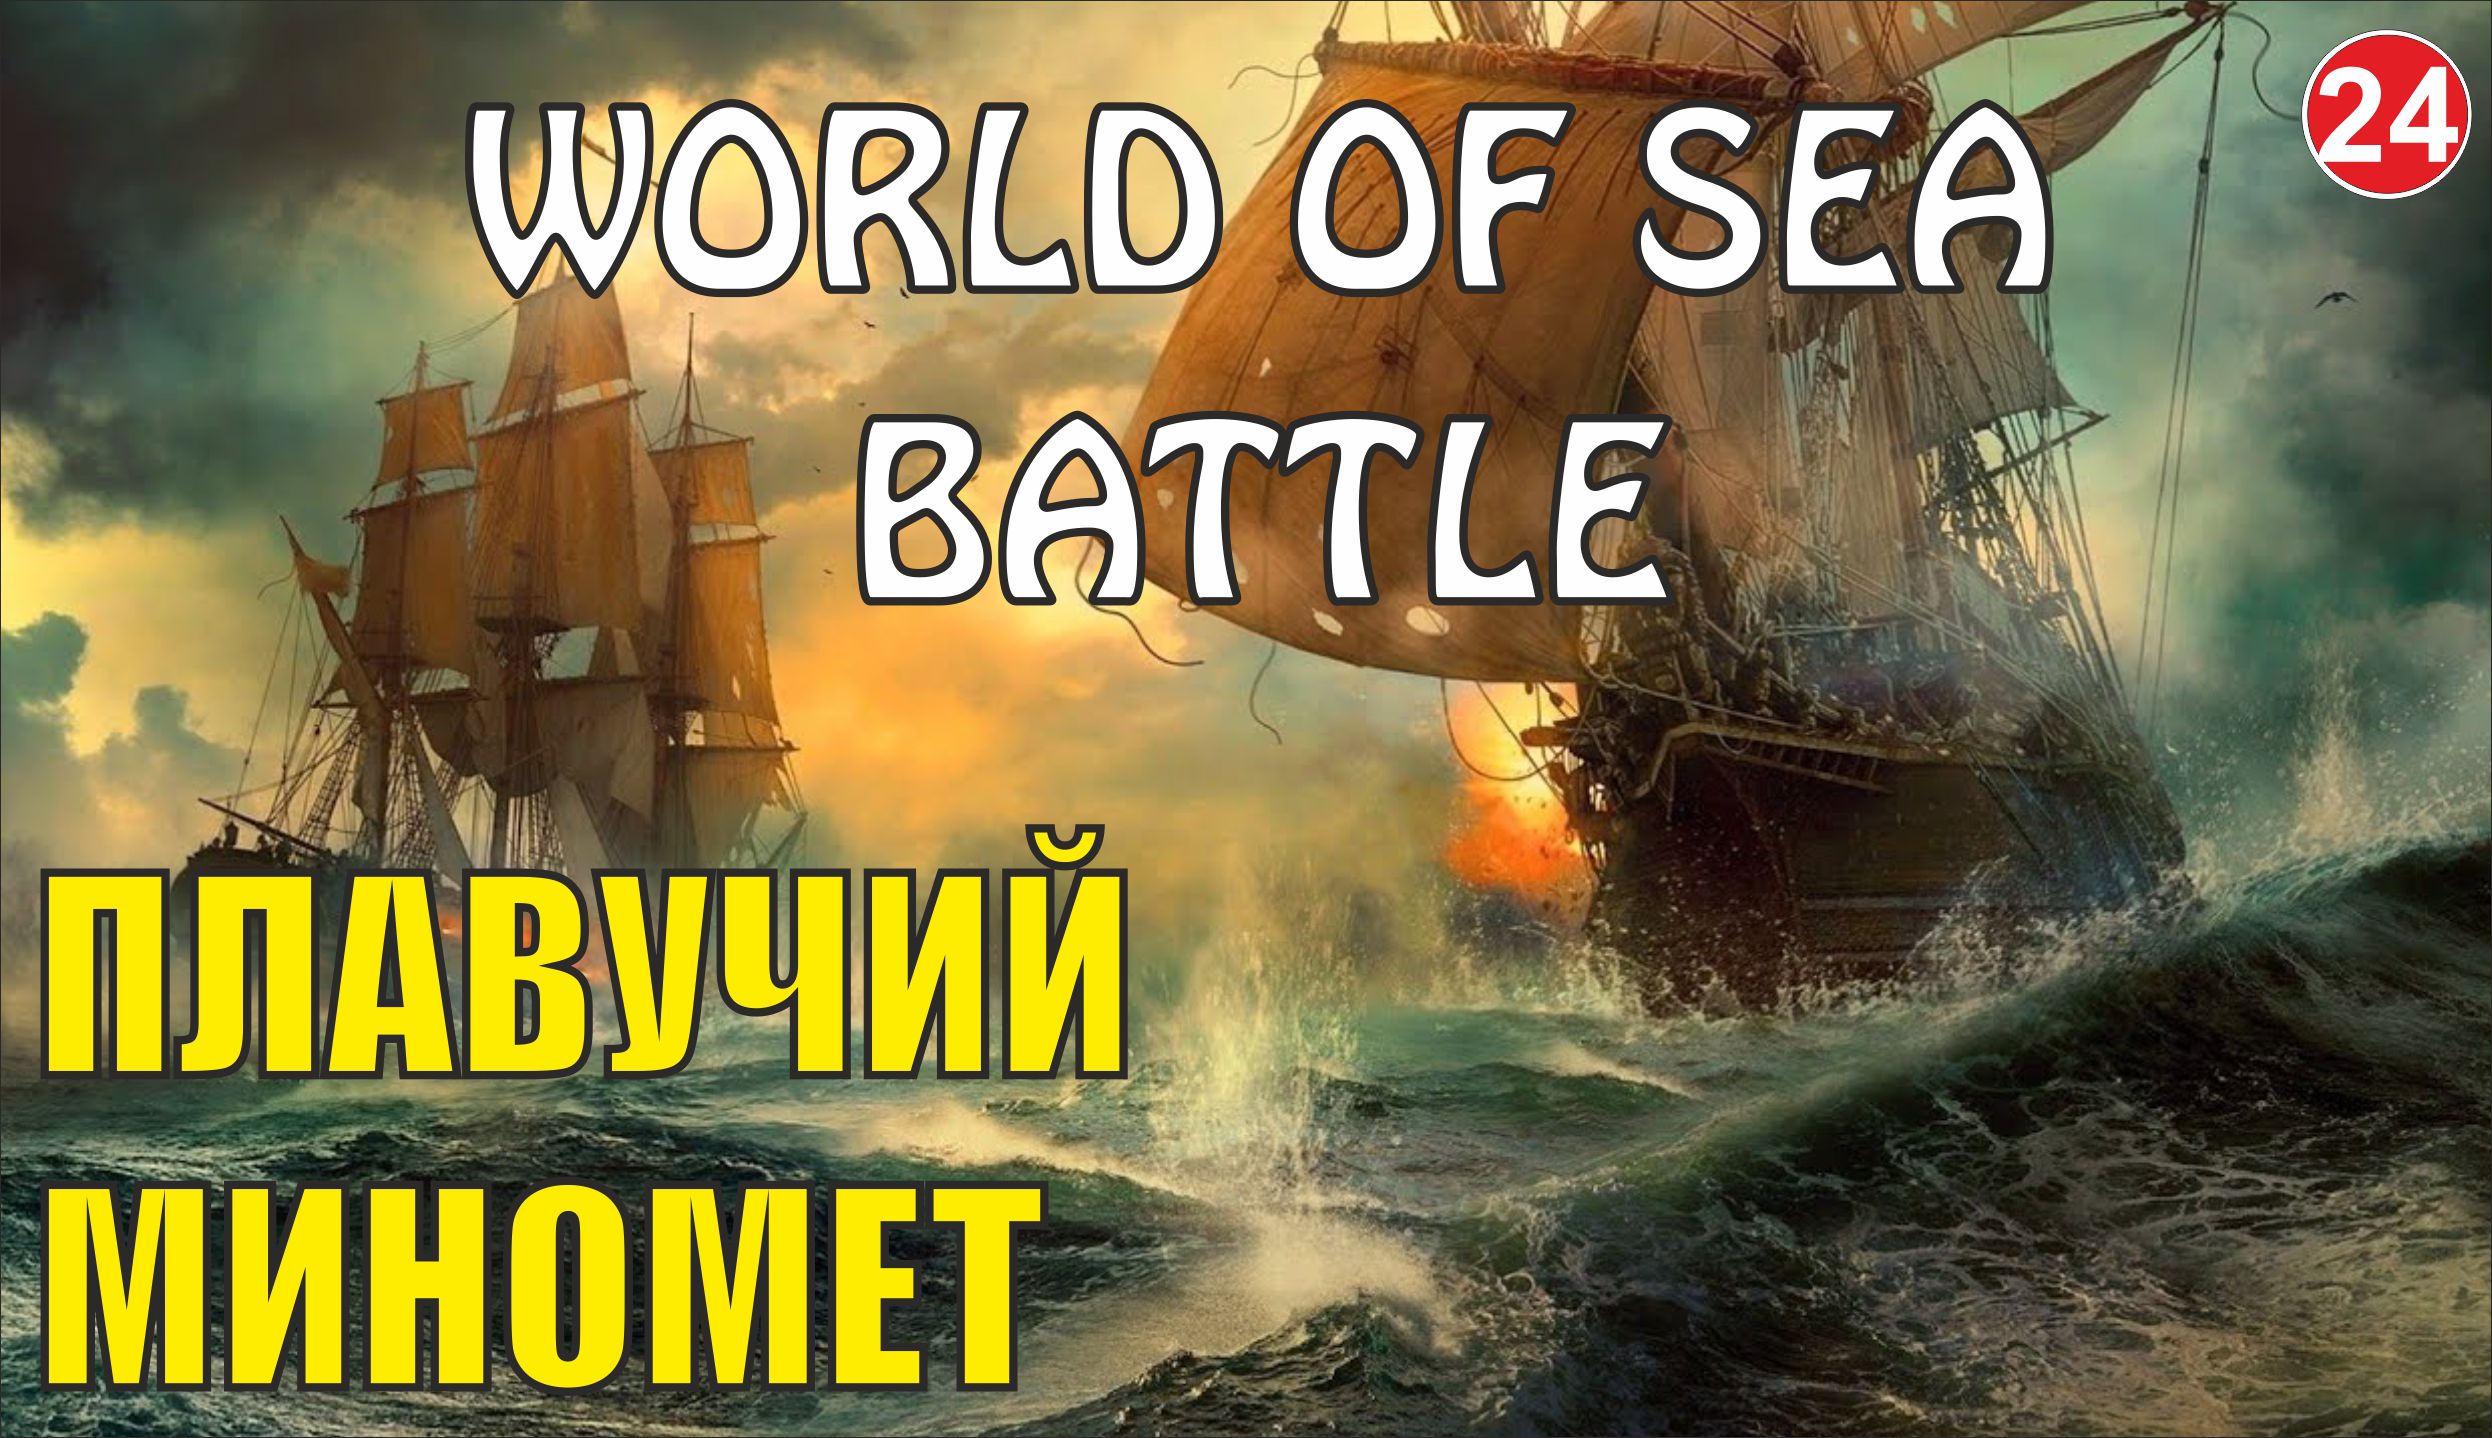 World of Sea Battle - Плавучий миномет